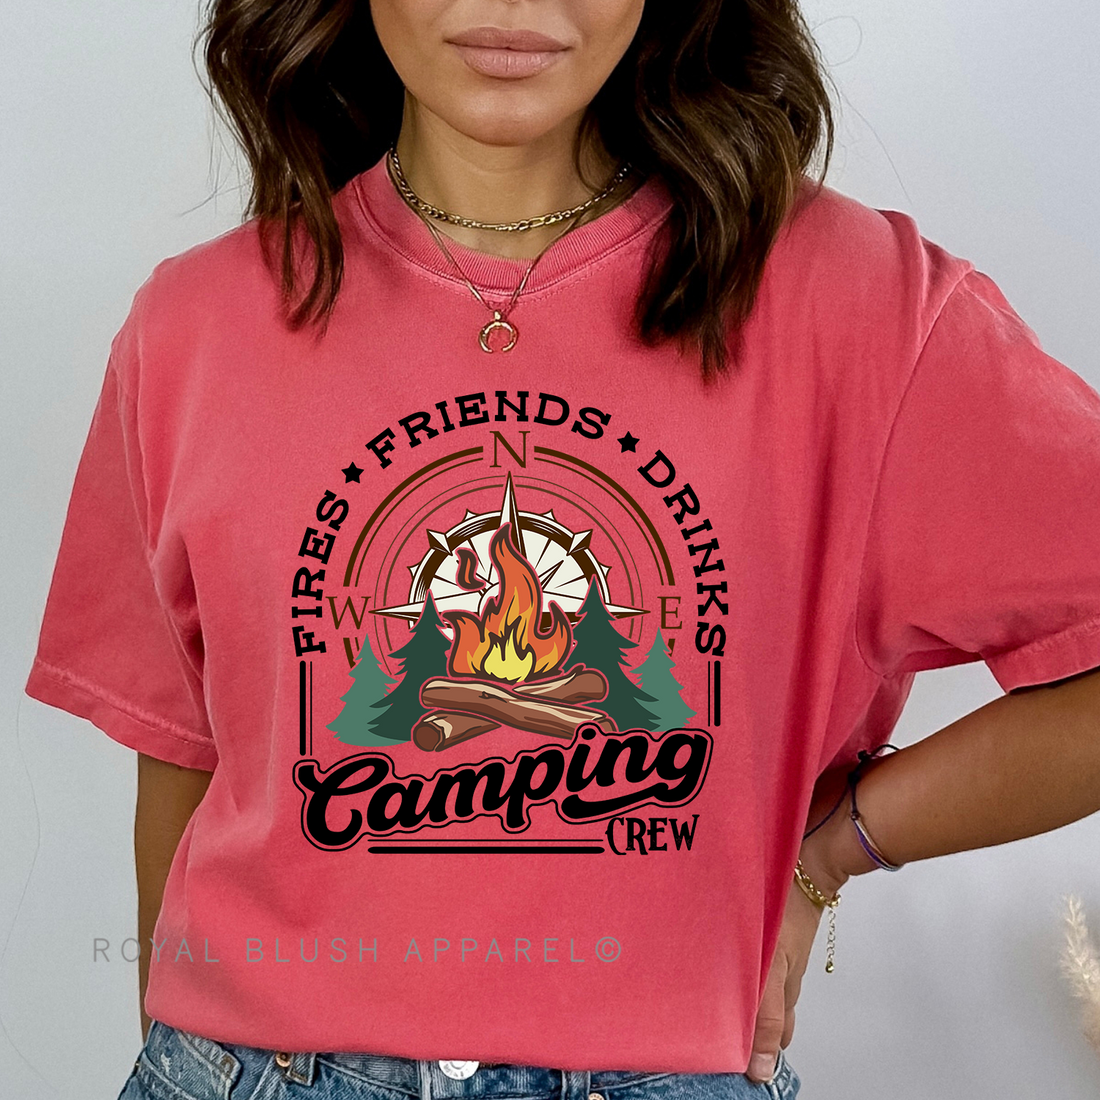 Camping Crew Full Color Transfer